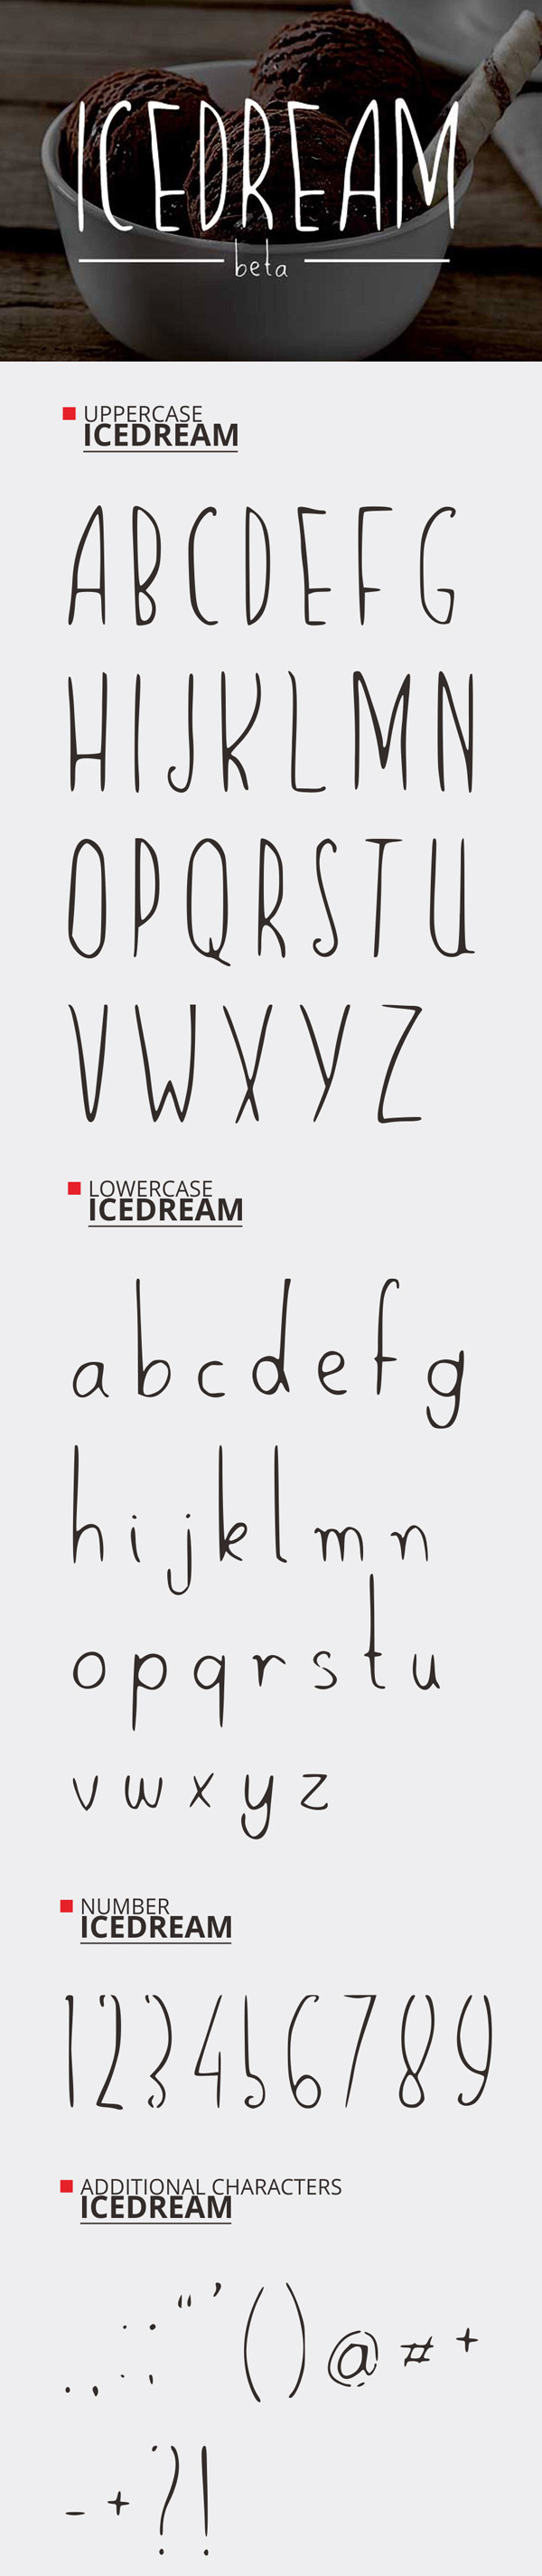 Icedream  Free Script Font